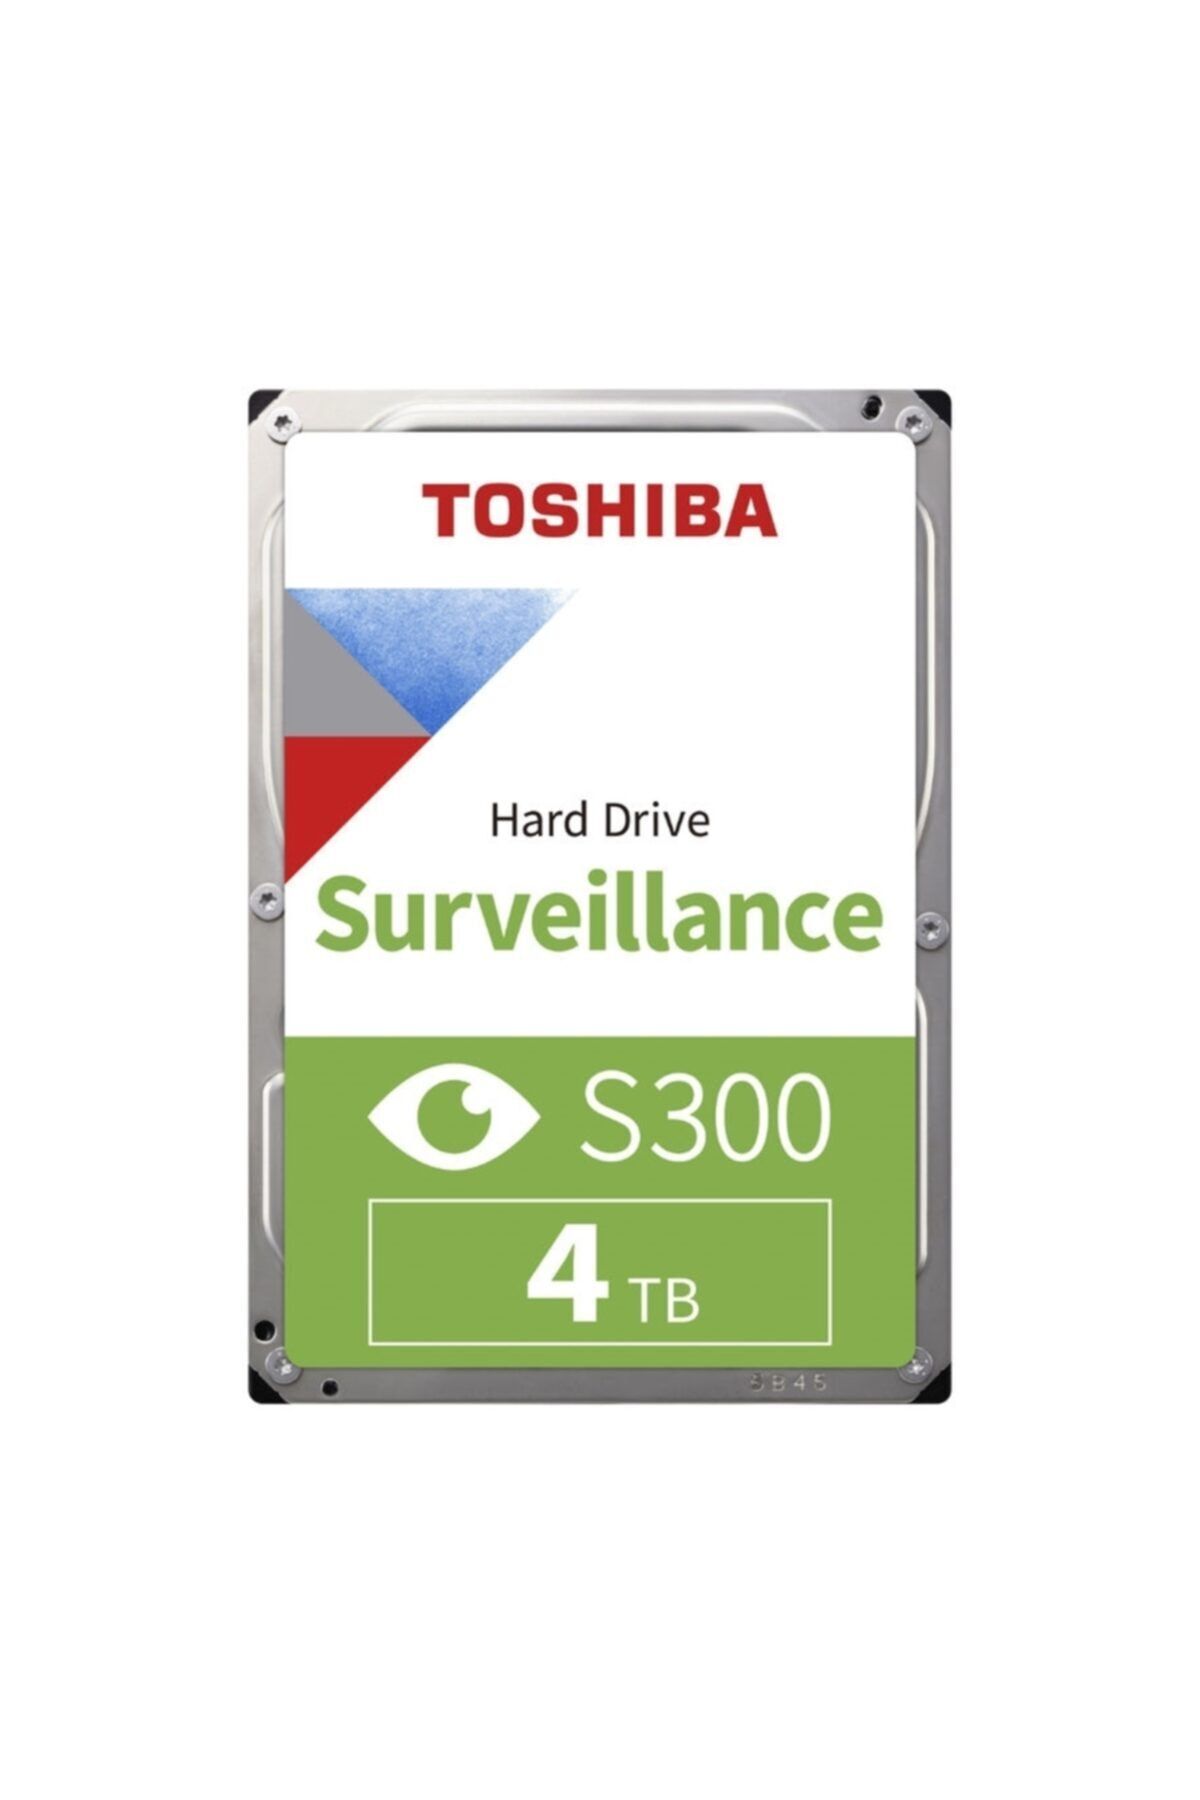 Toshiba Toshıba S300 4tb 5400rpm 256mb Sata3 6gbit/sn Hdwt840uzsva Güvenlik Hdd